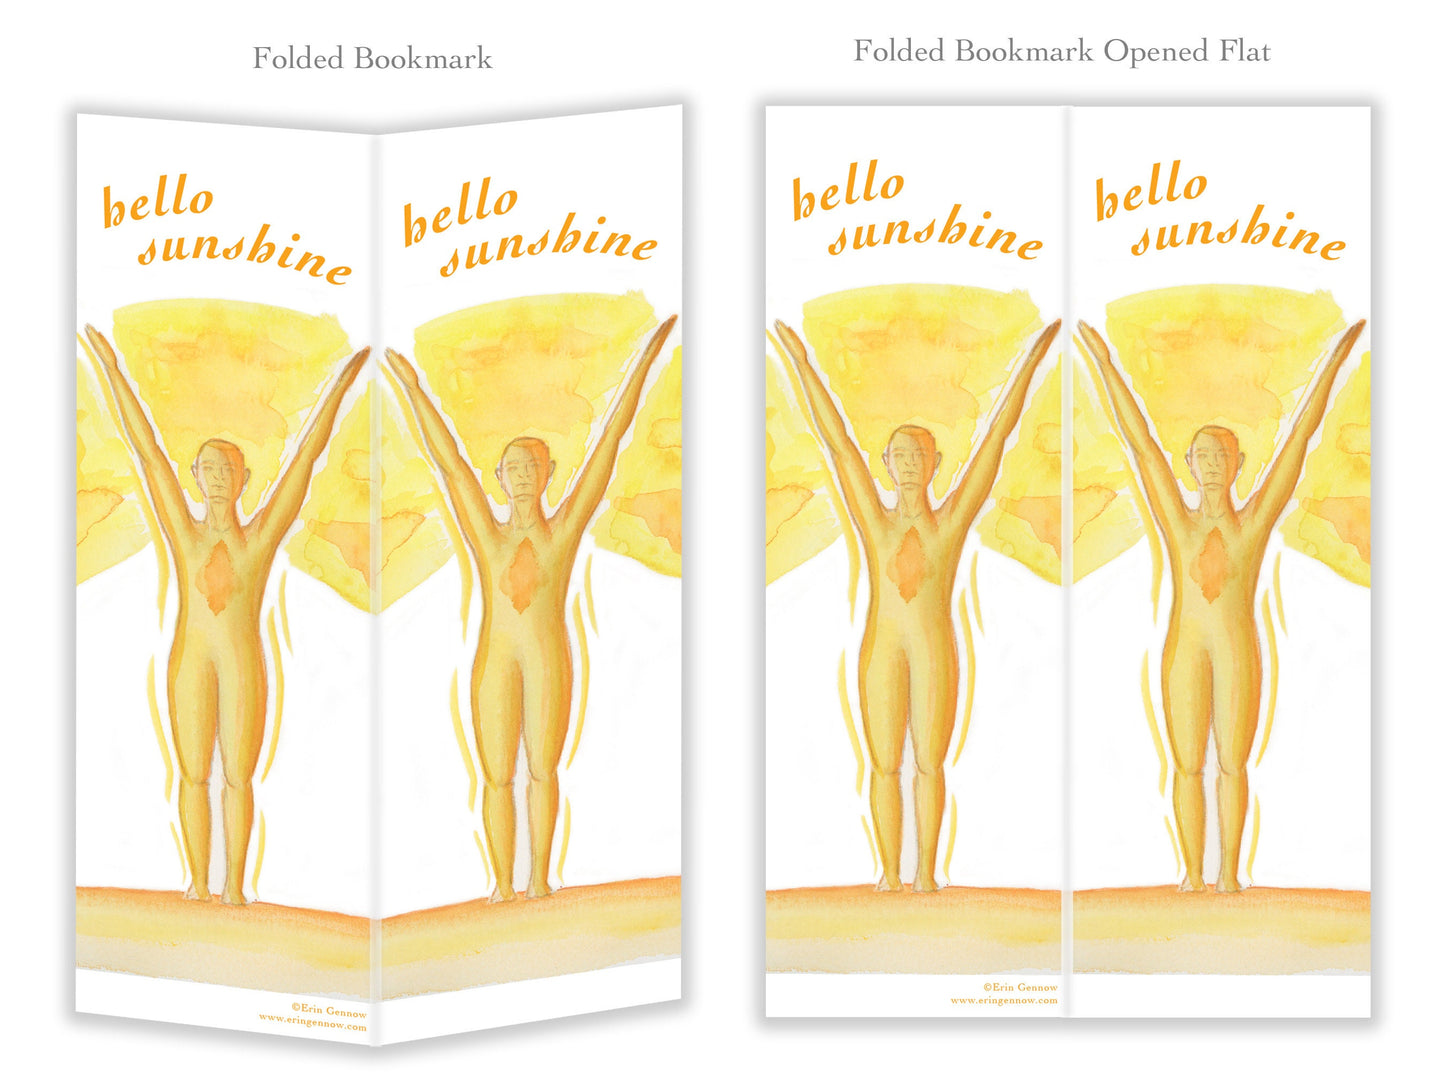 Folded Bookmarks - Set of 4 - The Yoga Series - Warrior 2, Sun Salutation, Tree Pose, Downward Dog, Handmade